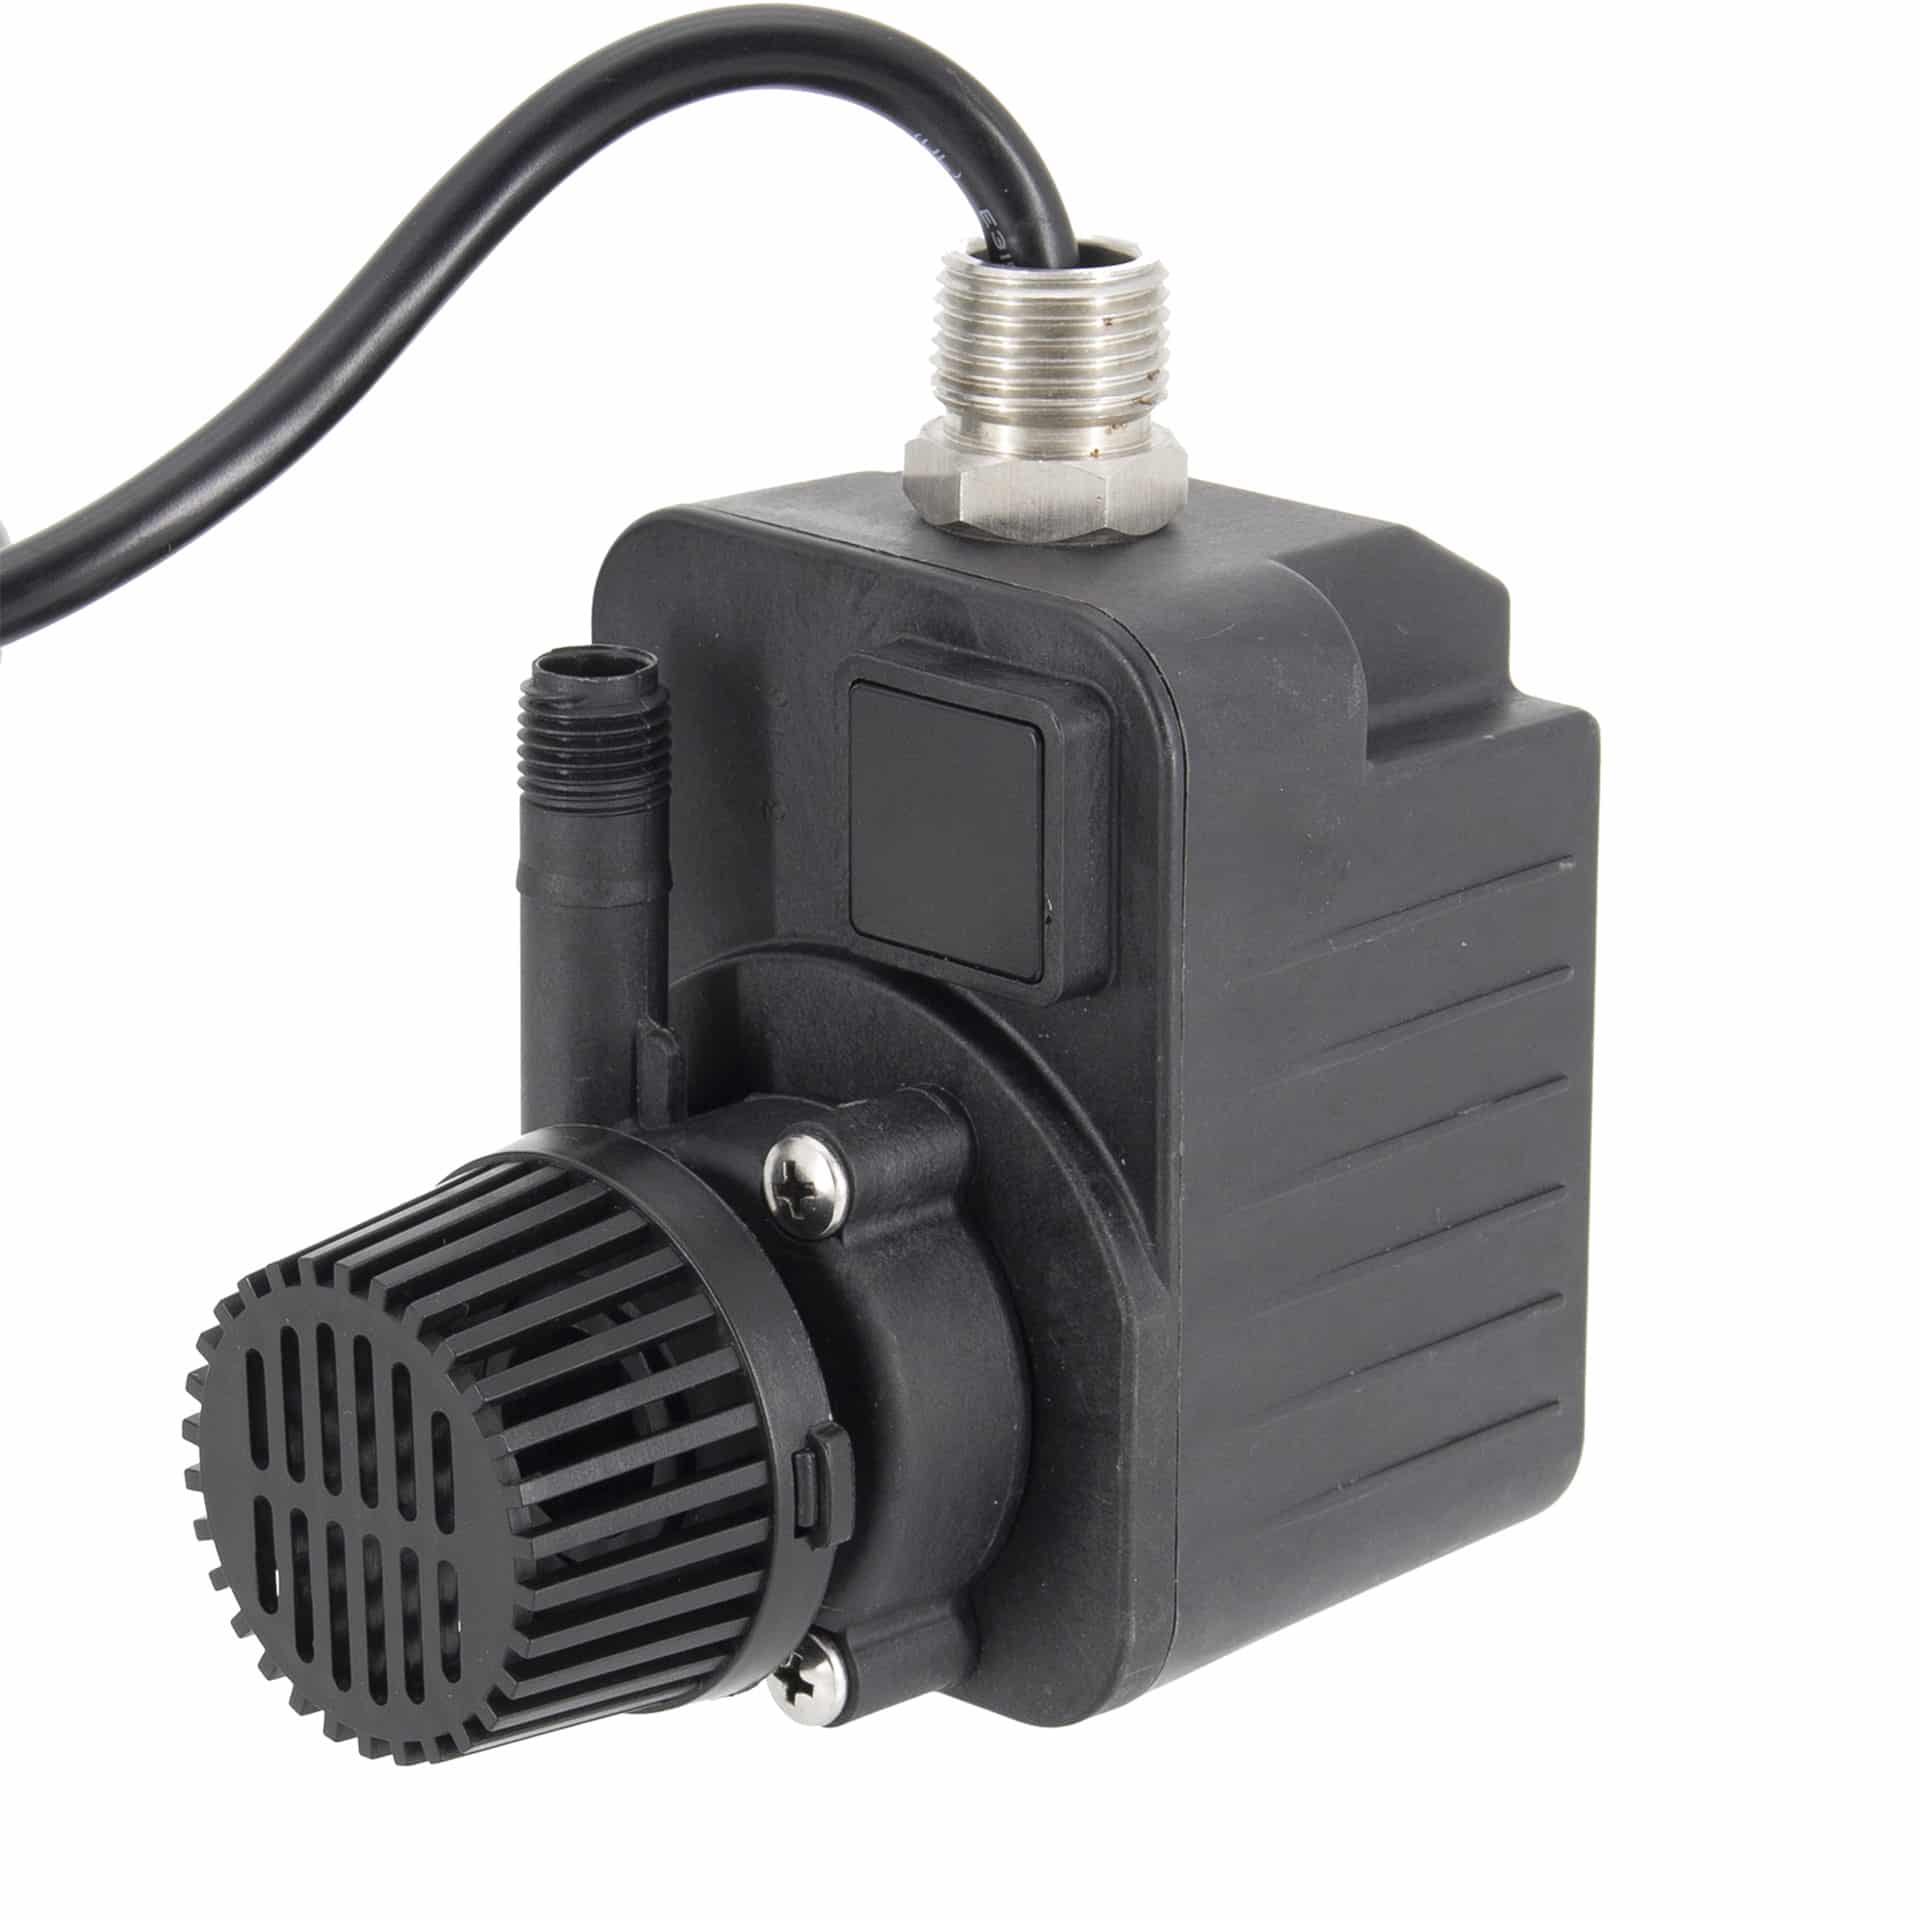 GP210C – Submersible Parts Washer Pump, 230V, 190 GPH, 6 Ft Power Cord (No Plug)